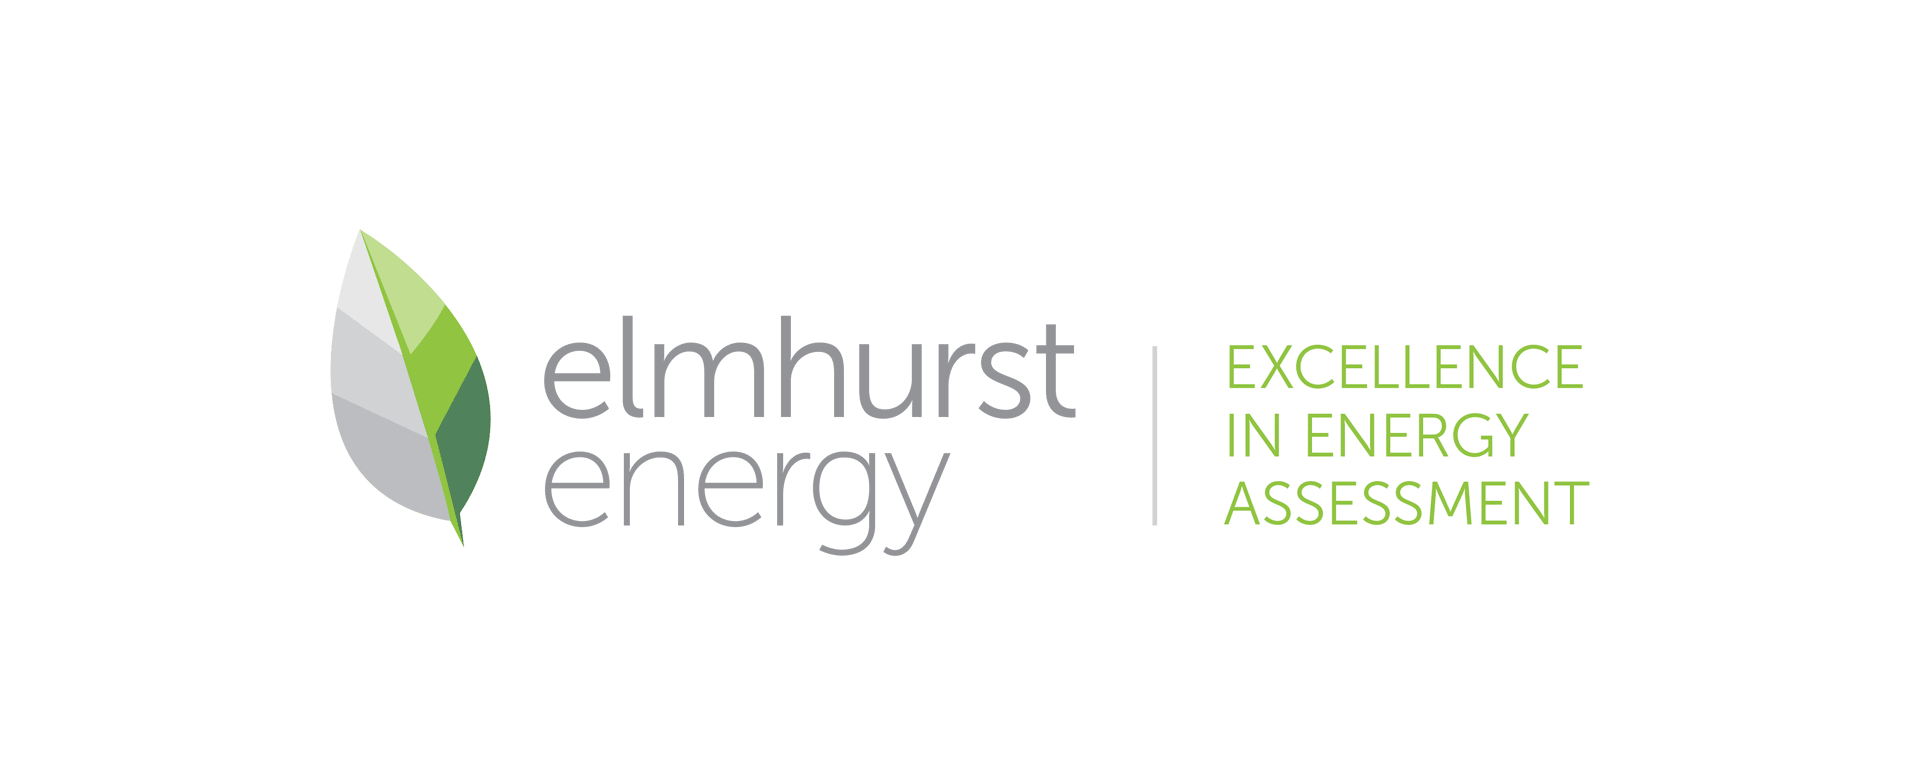 Elmhurst Energy New Logo with Tagline